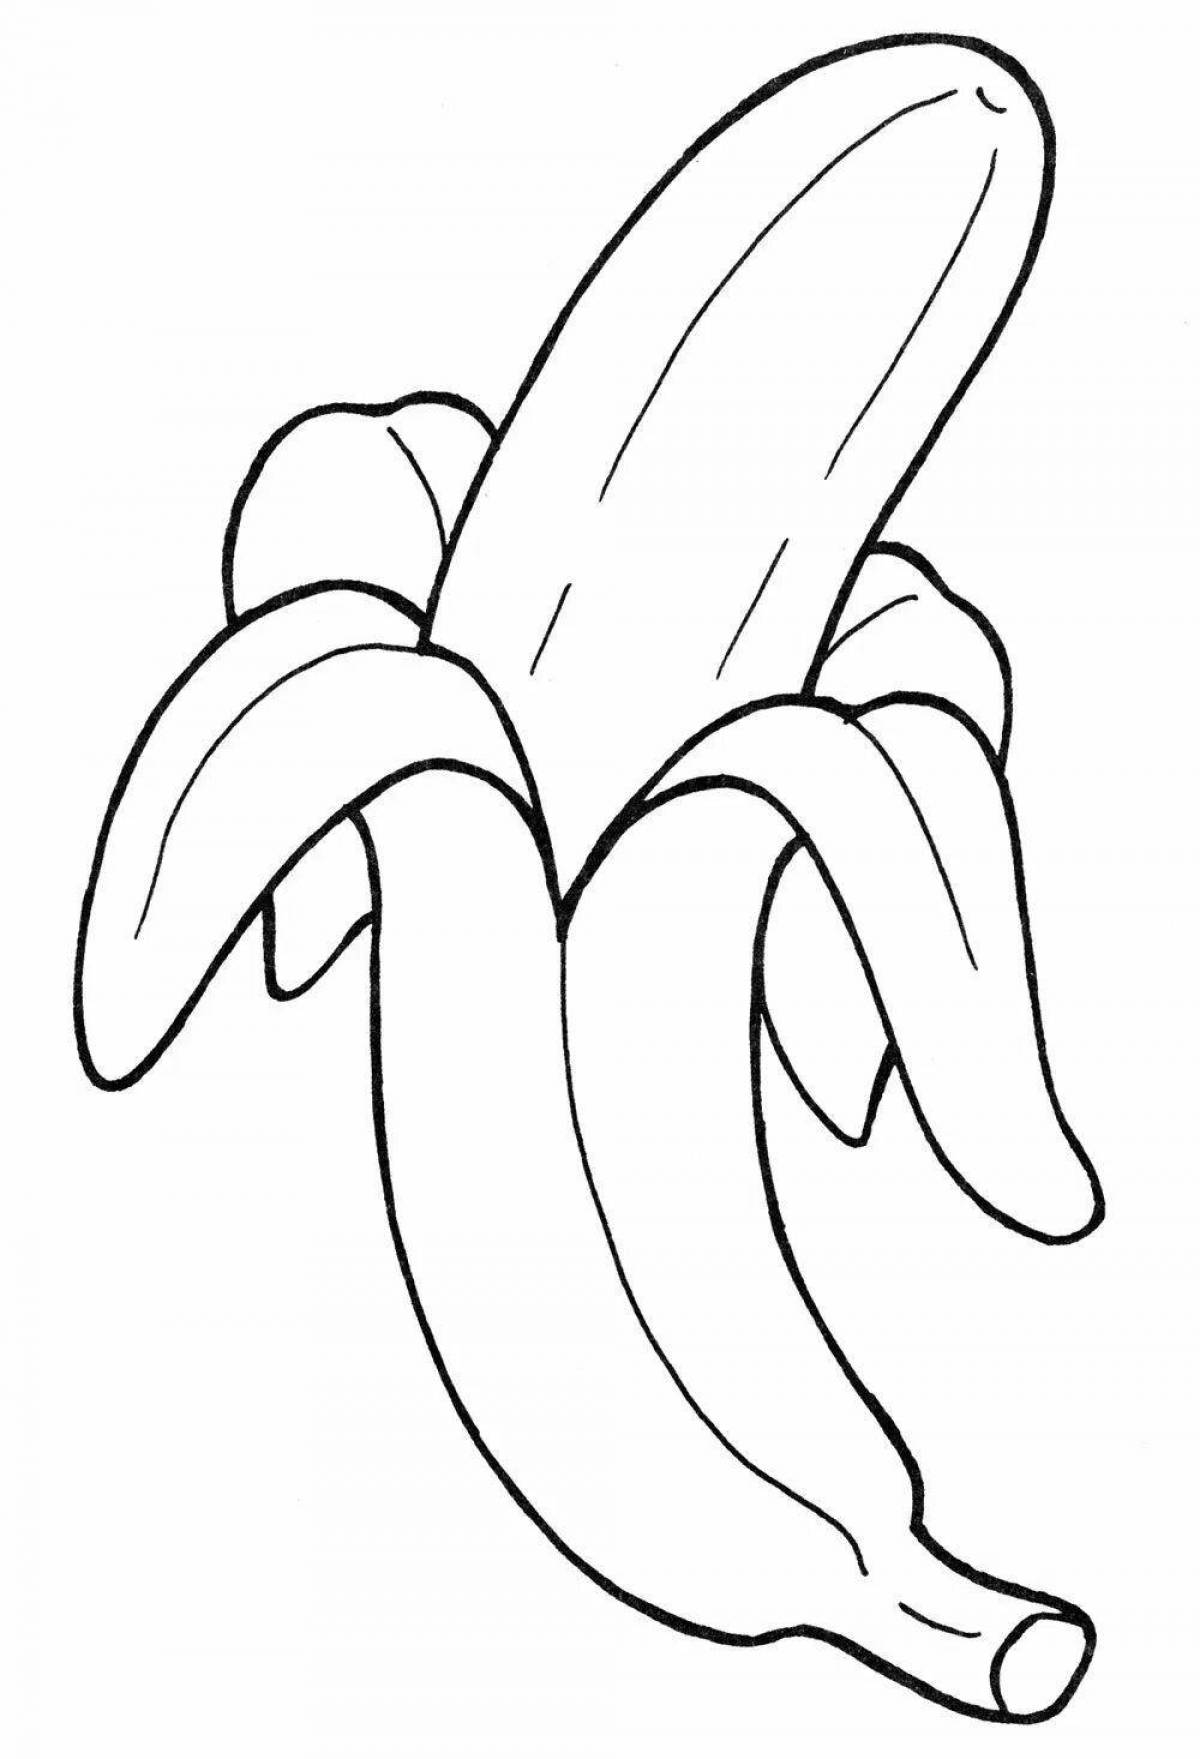 Joyful banana coloring